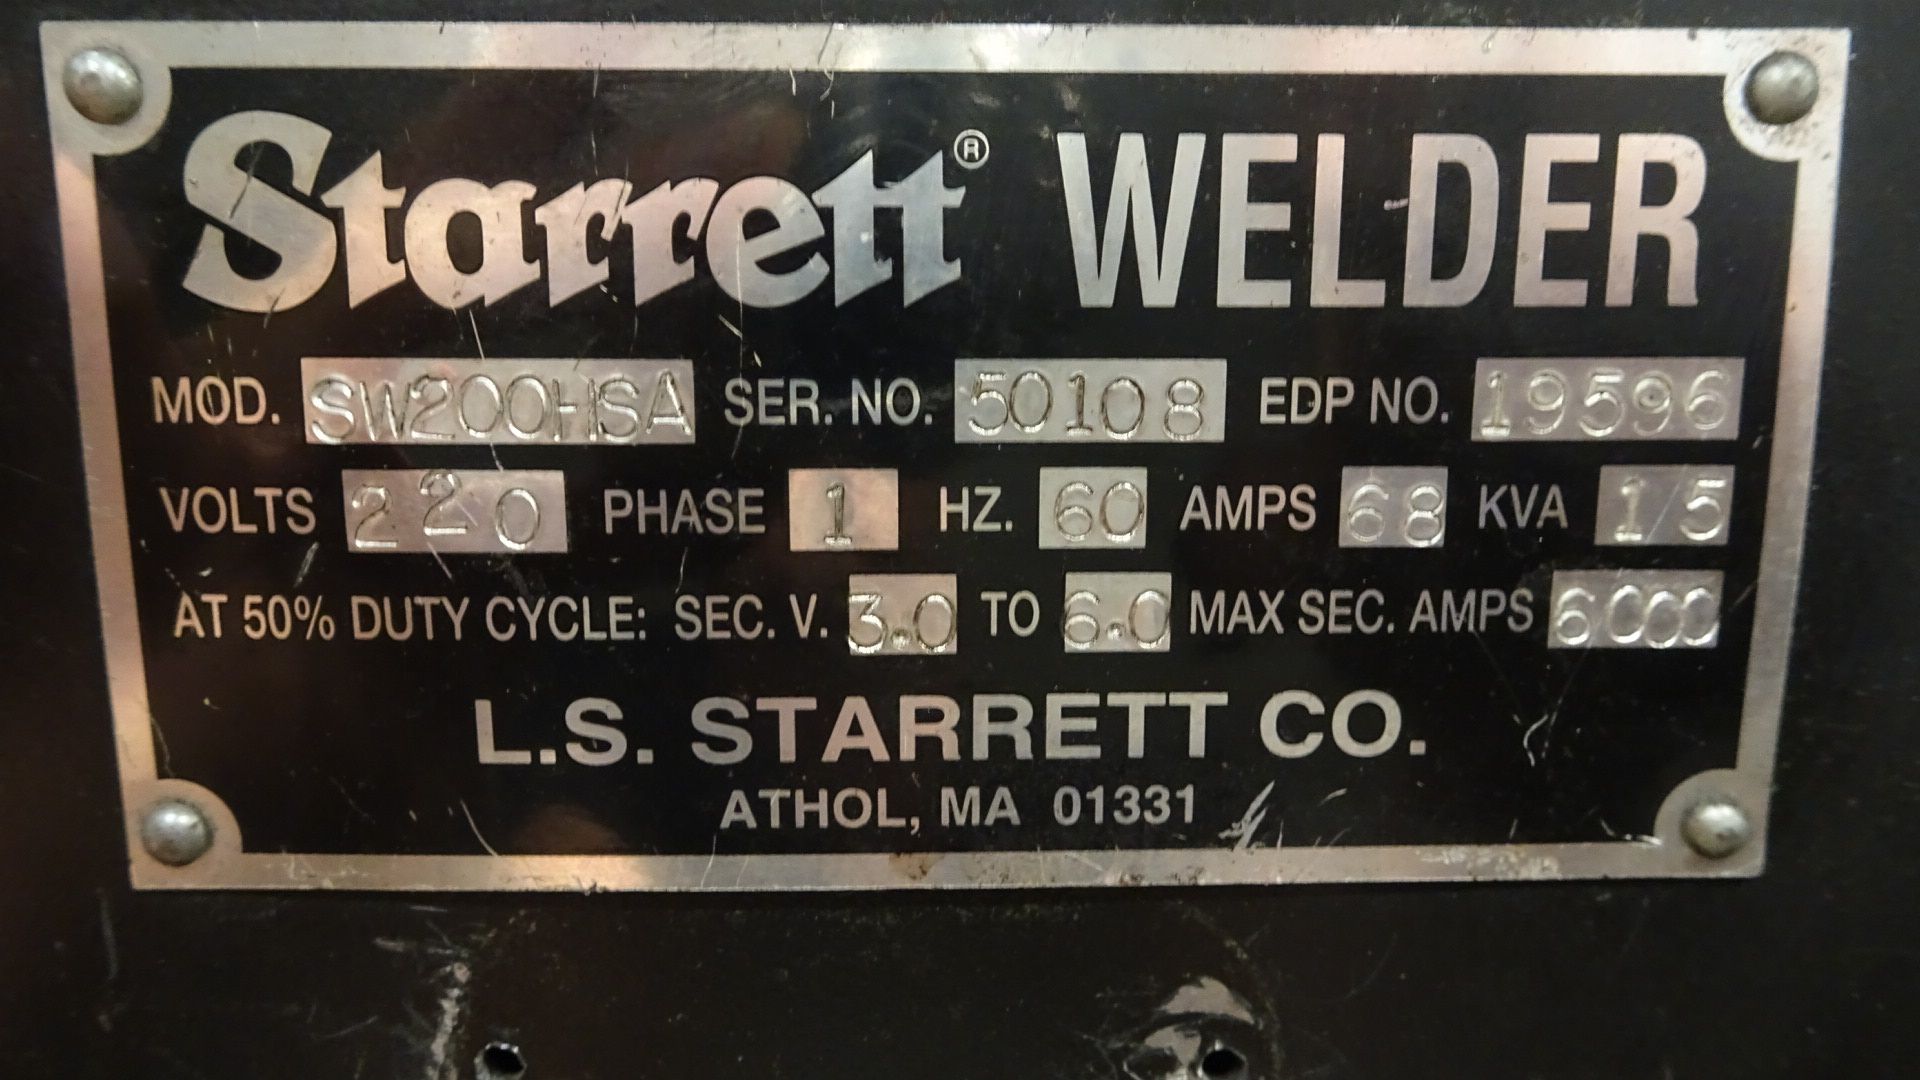 Starrett Model SW-200HSA Butt Welder with Table, sn:05108, EDP#19596 - Image 3 of 3